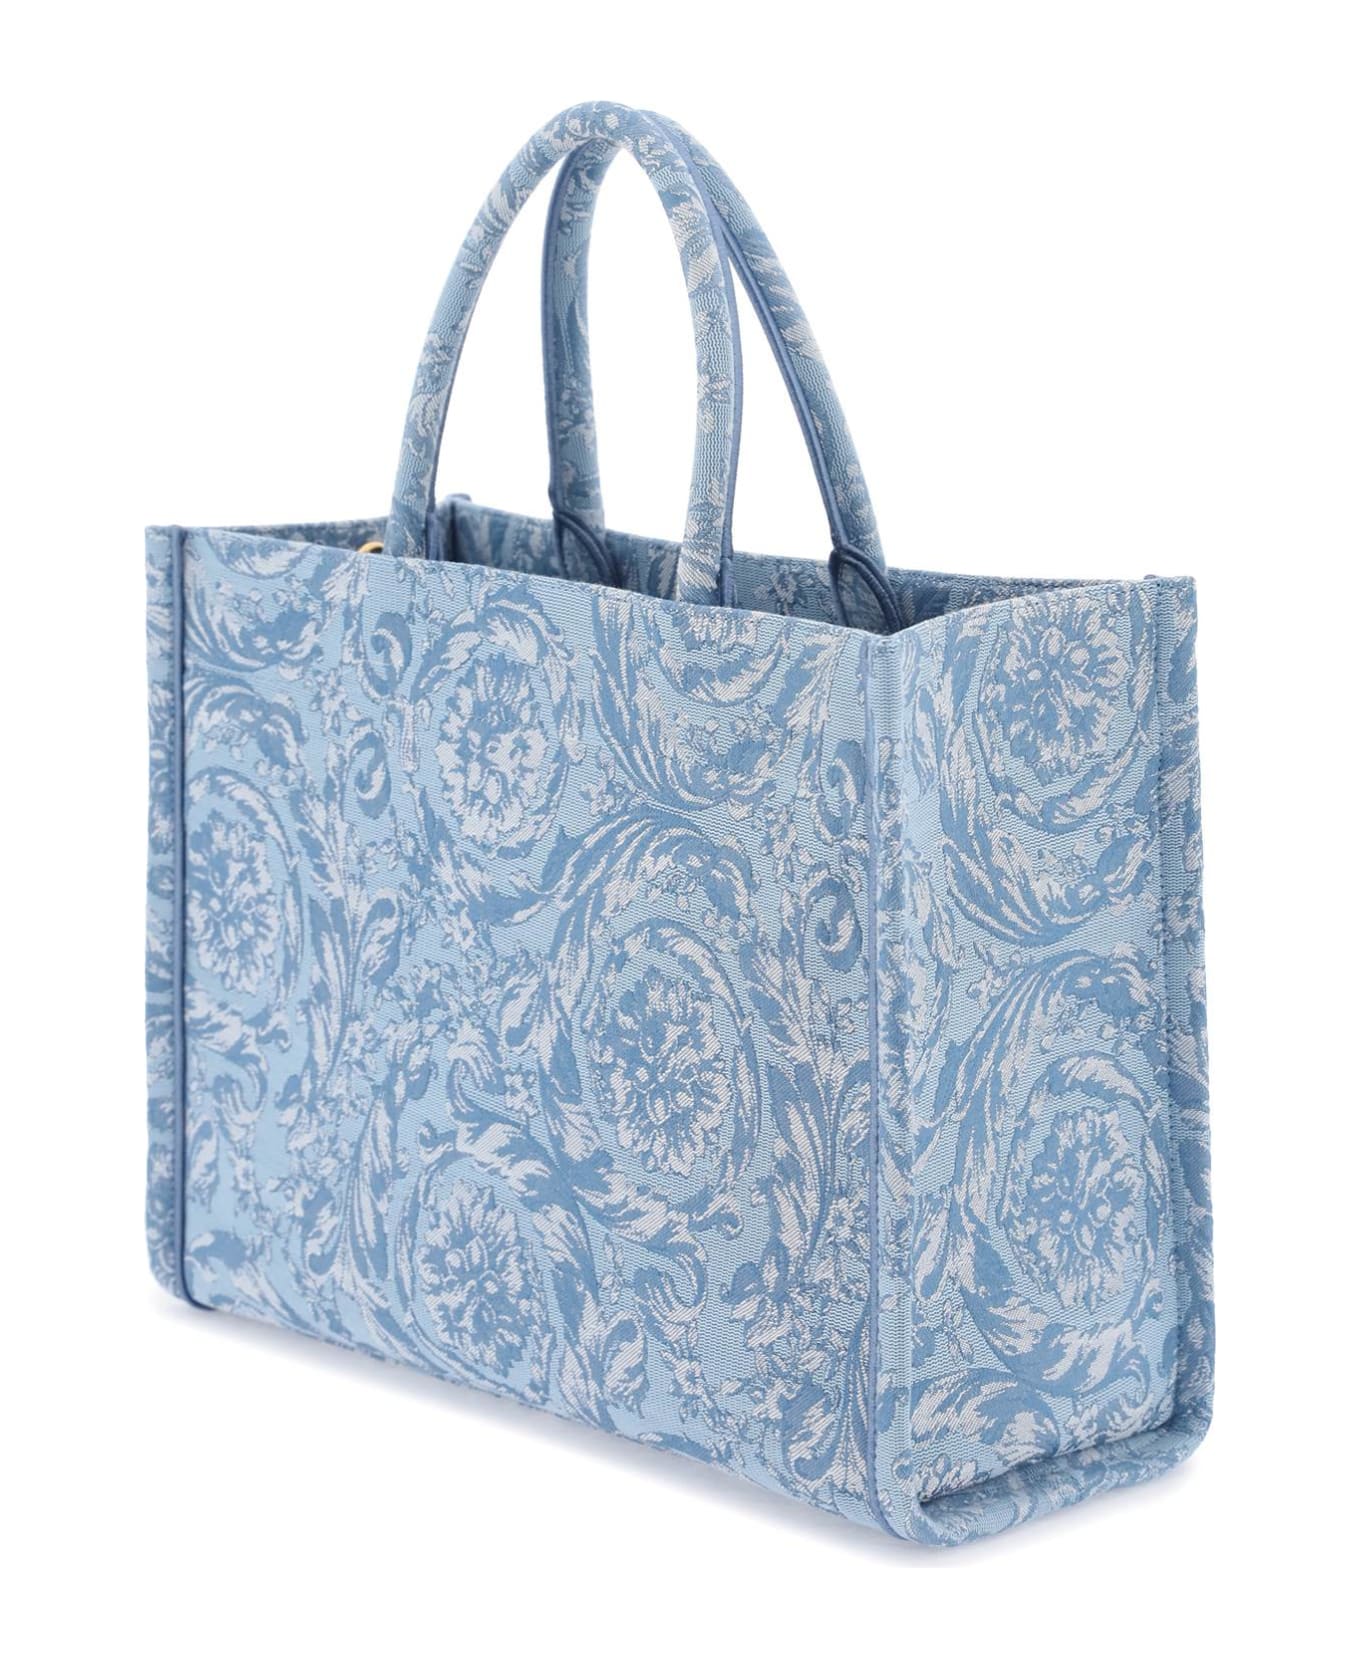 Versace Athena Logo Embroidered Tote Bag - BABY BLUE GENTIAN BLUE VE (Light blue)